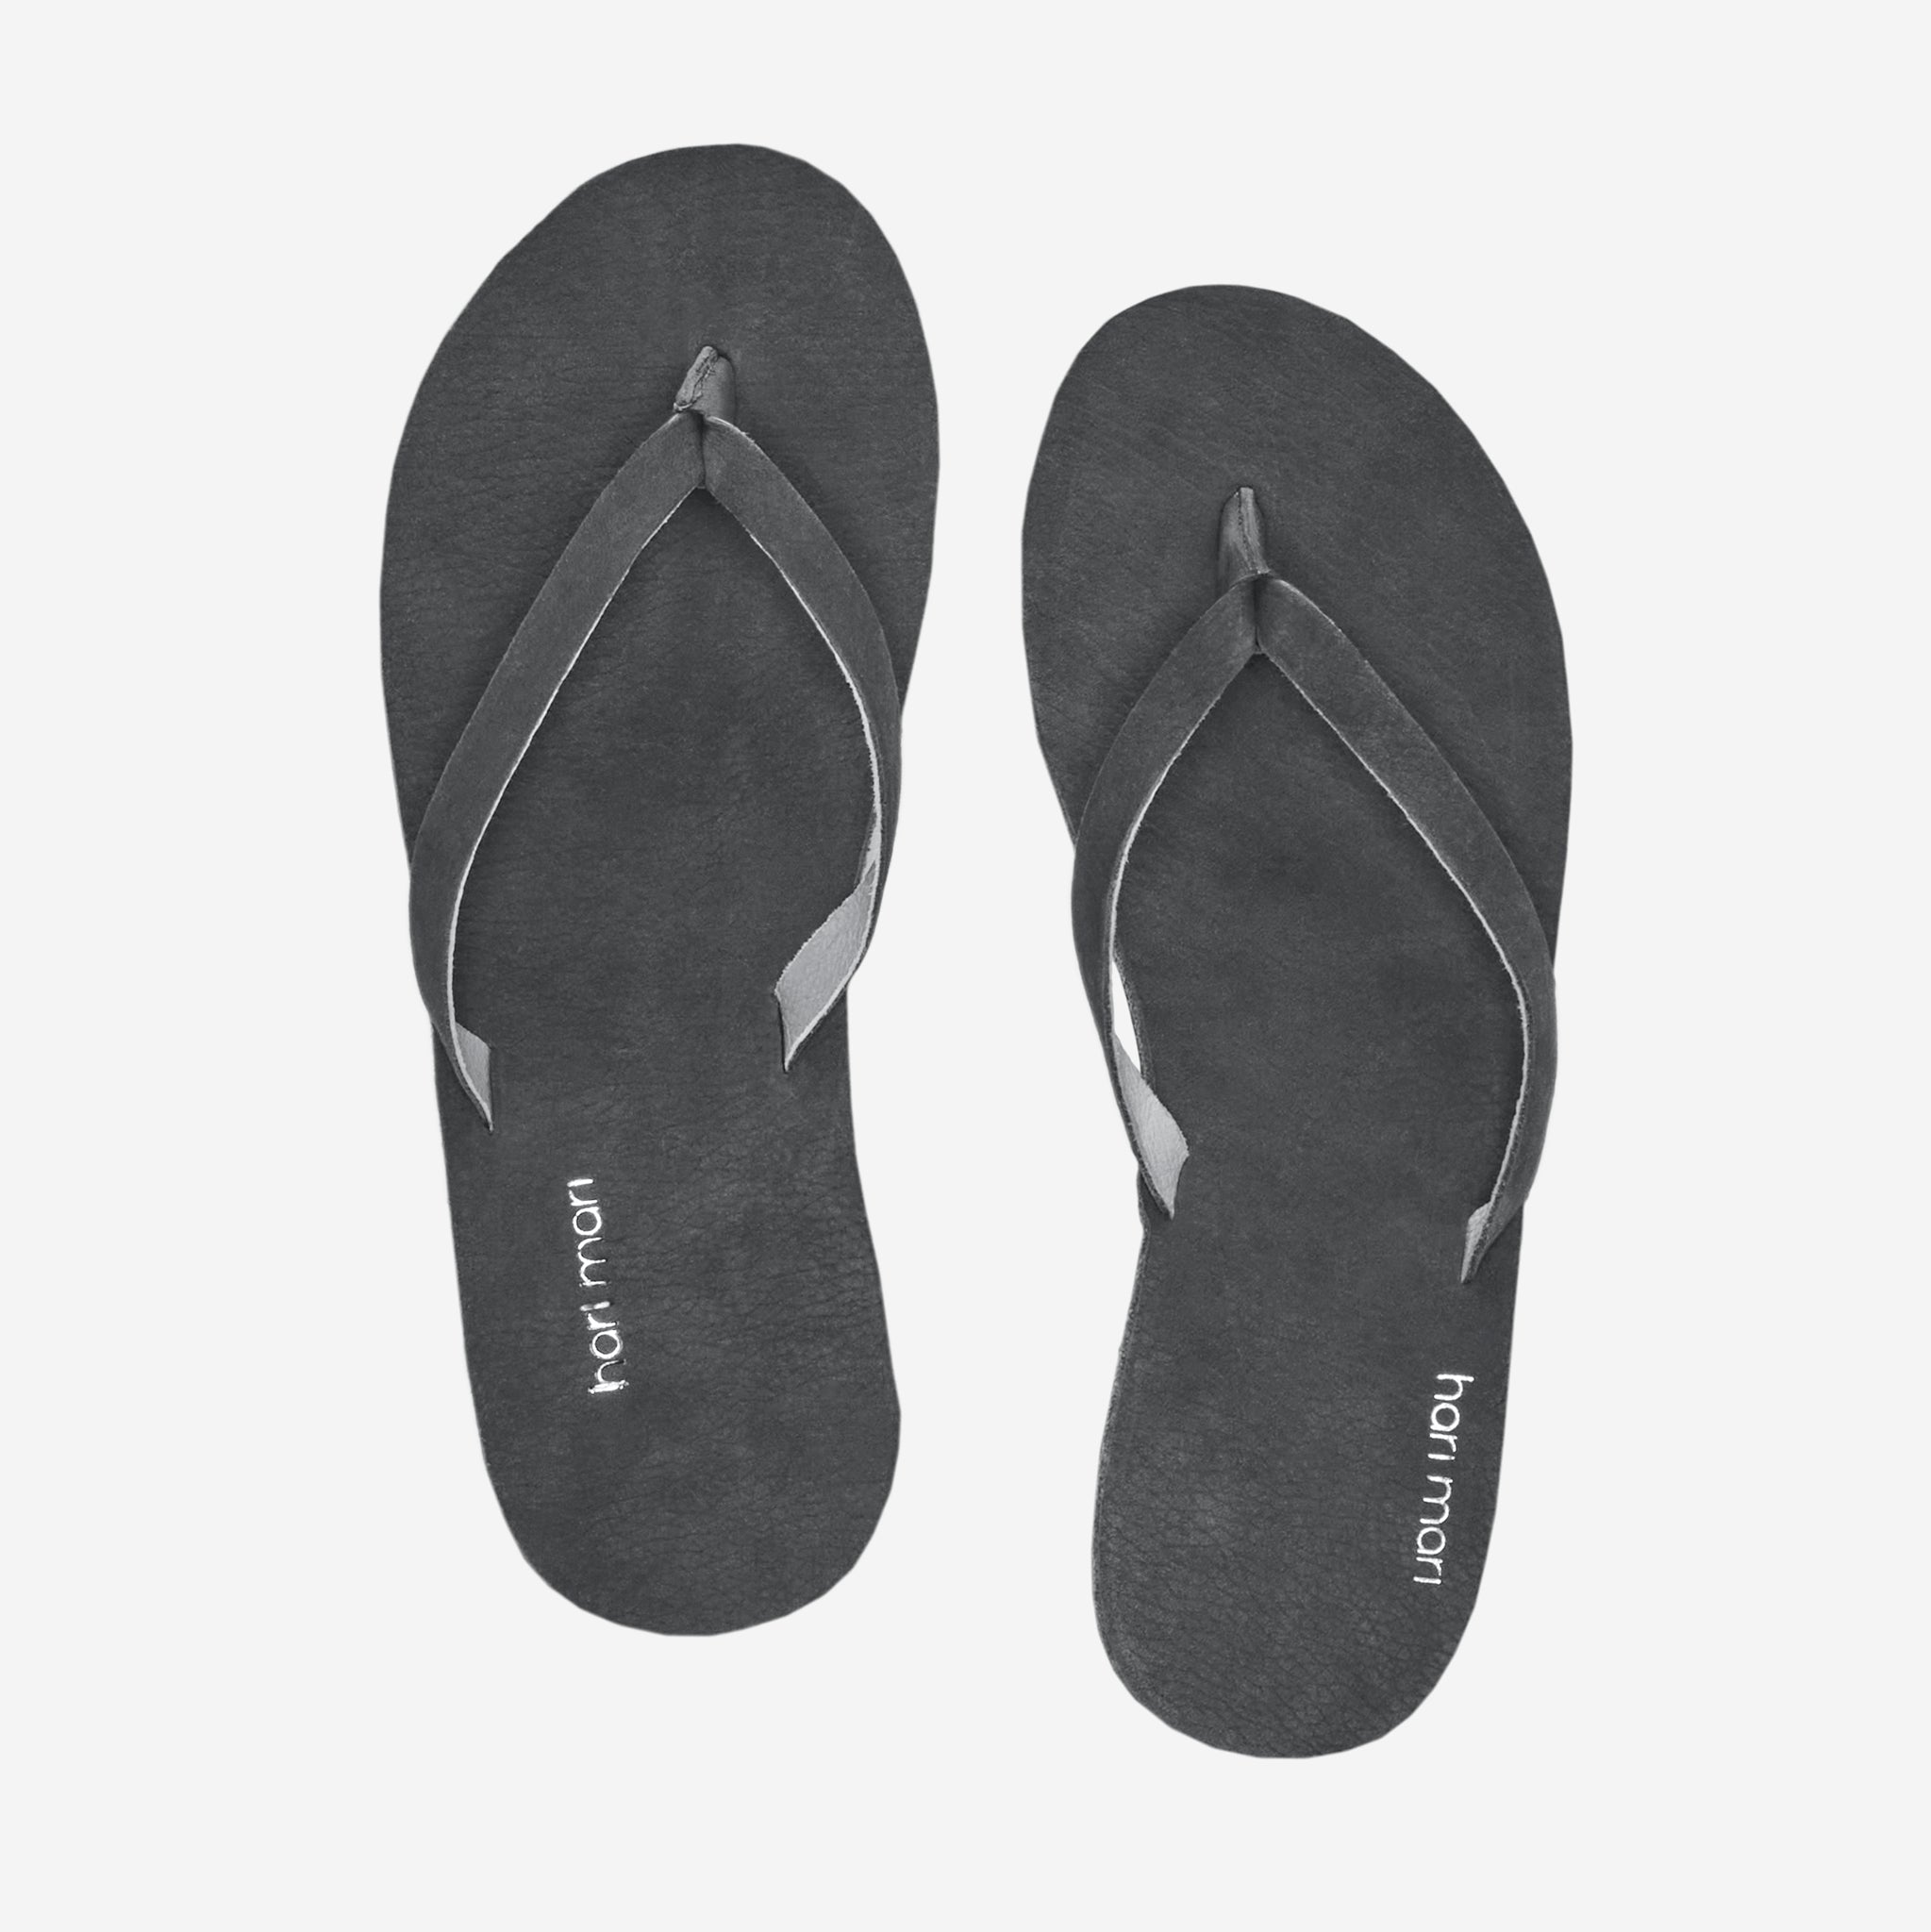 Mithali Rust Yoga Mat Sandals for Women